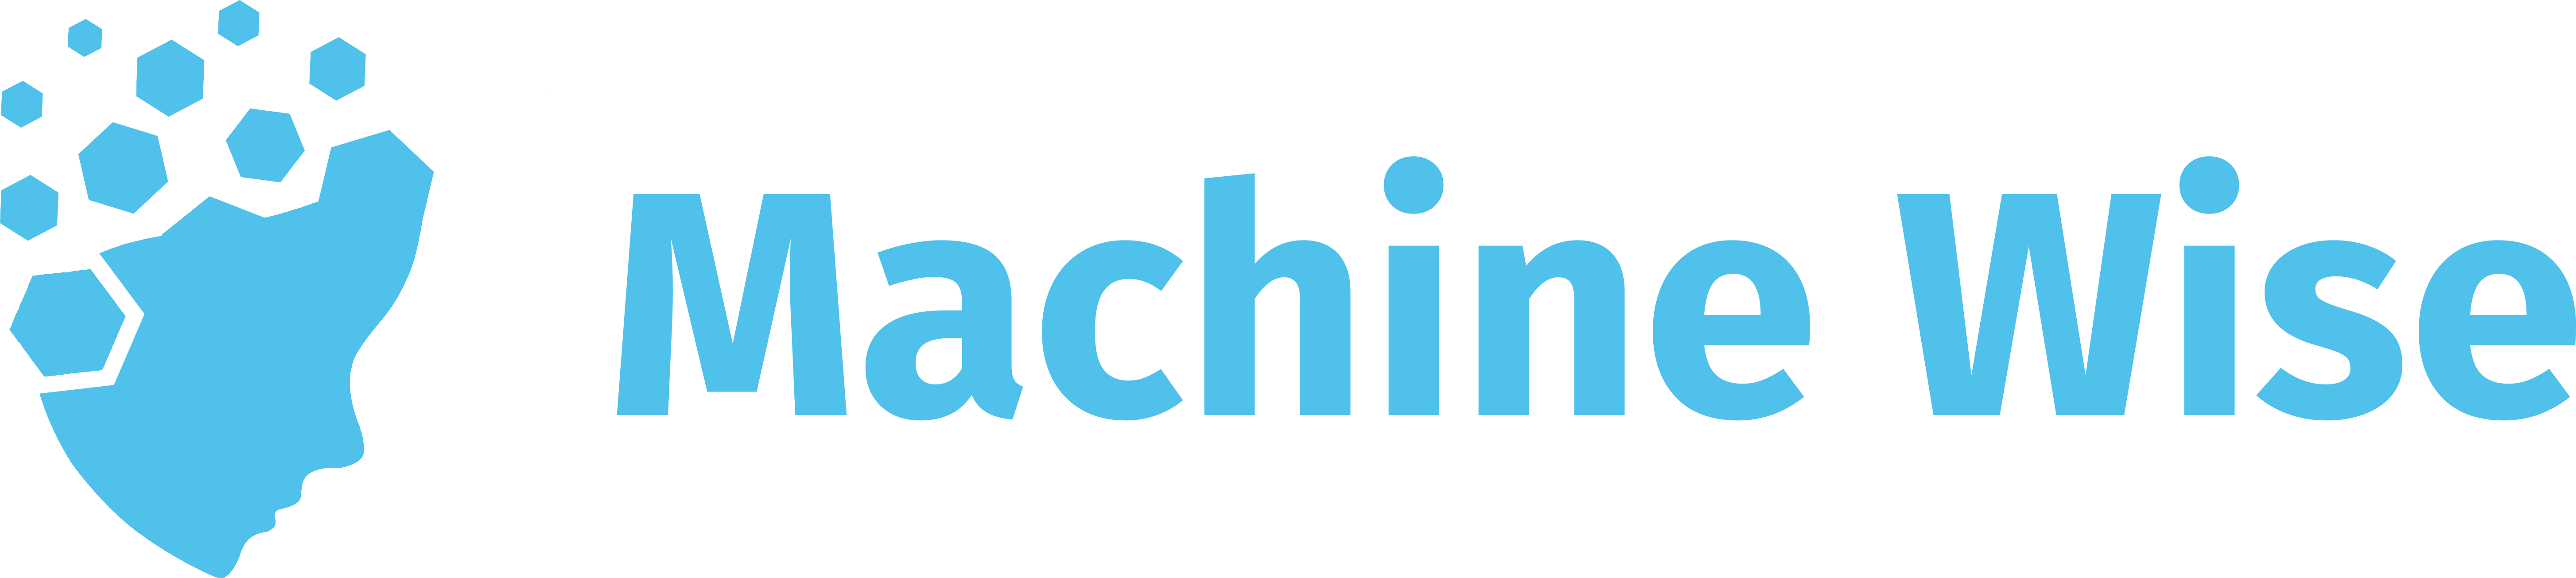 MachineWise logo